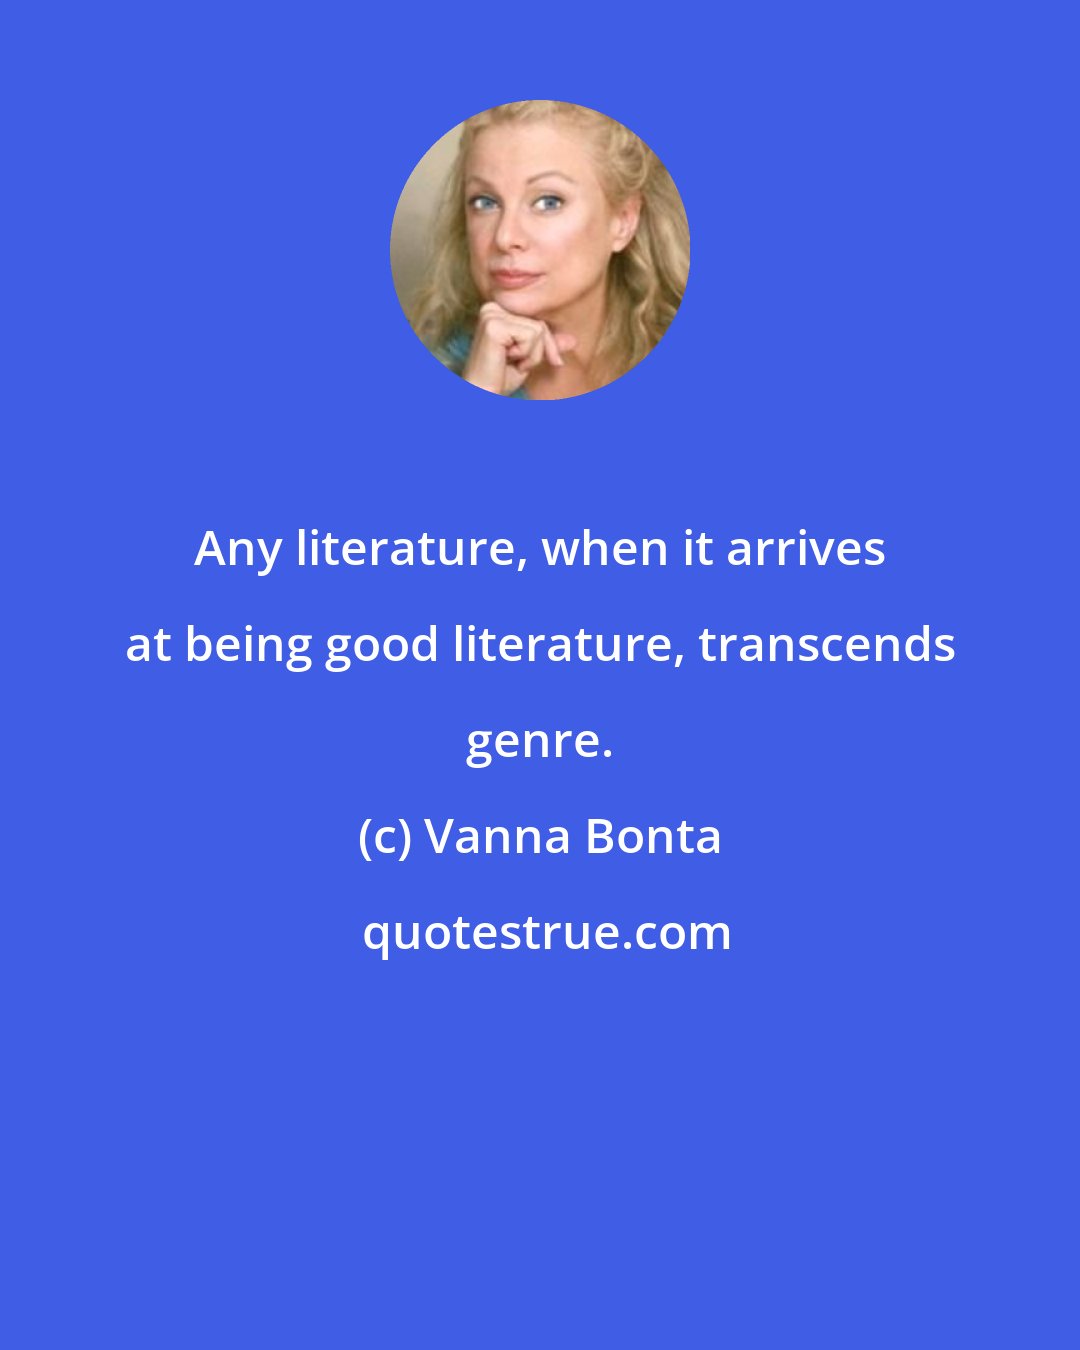 Vanna Bonta: Any literature, when it arrives at being good literature, transcends genre.